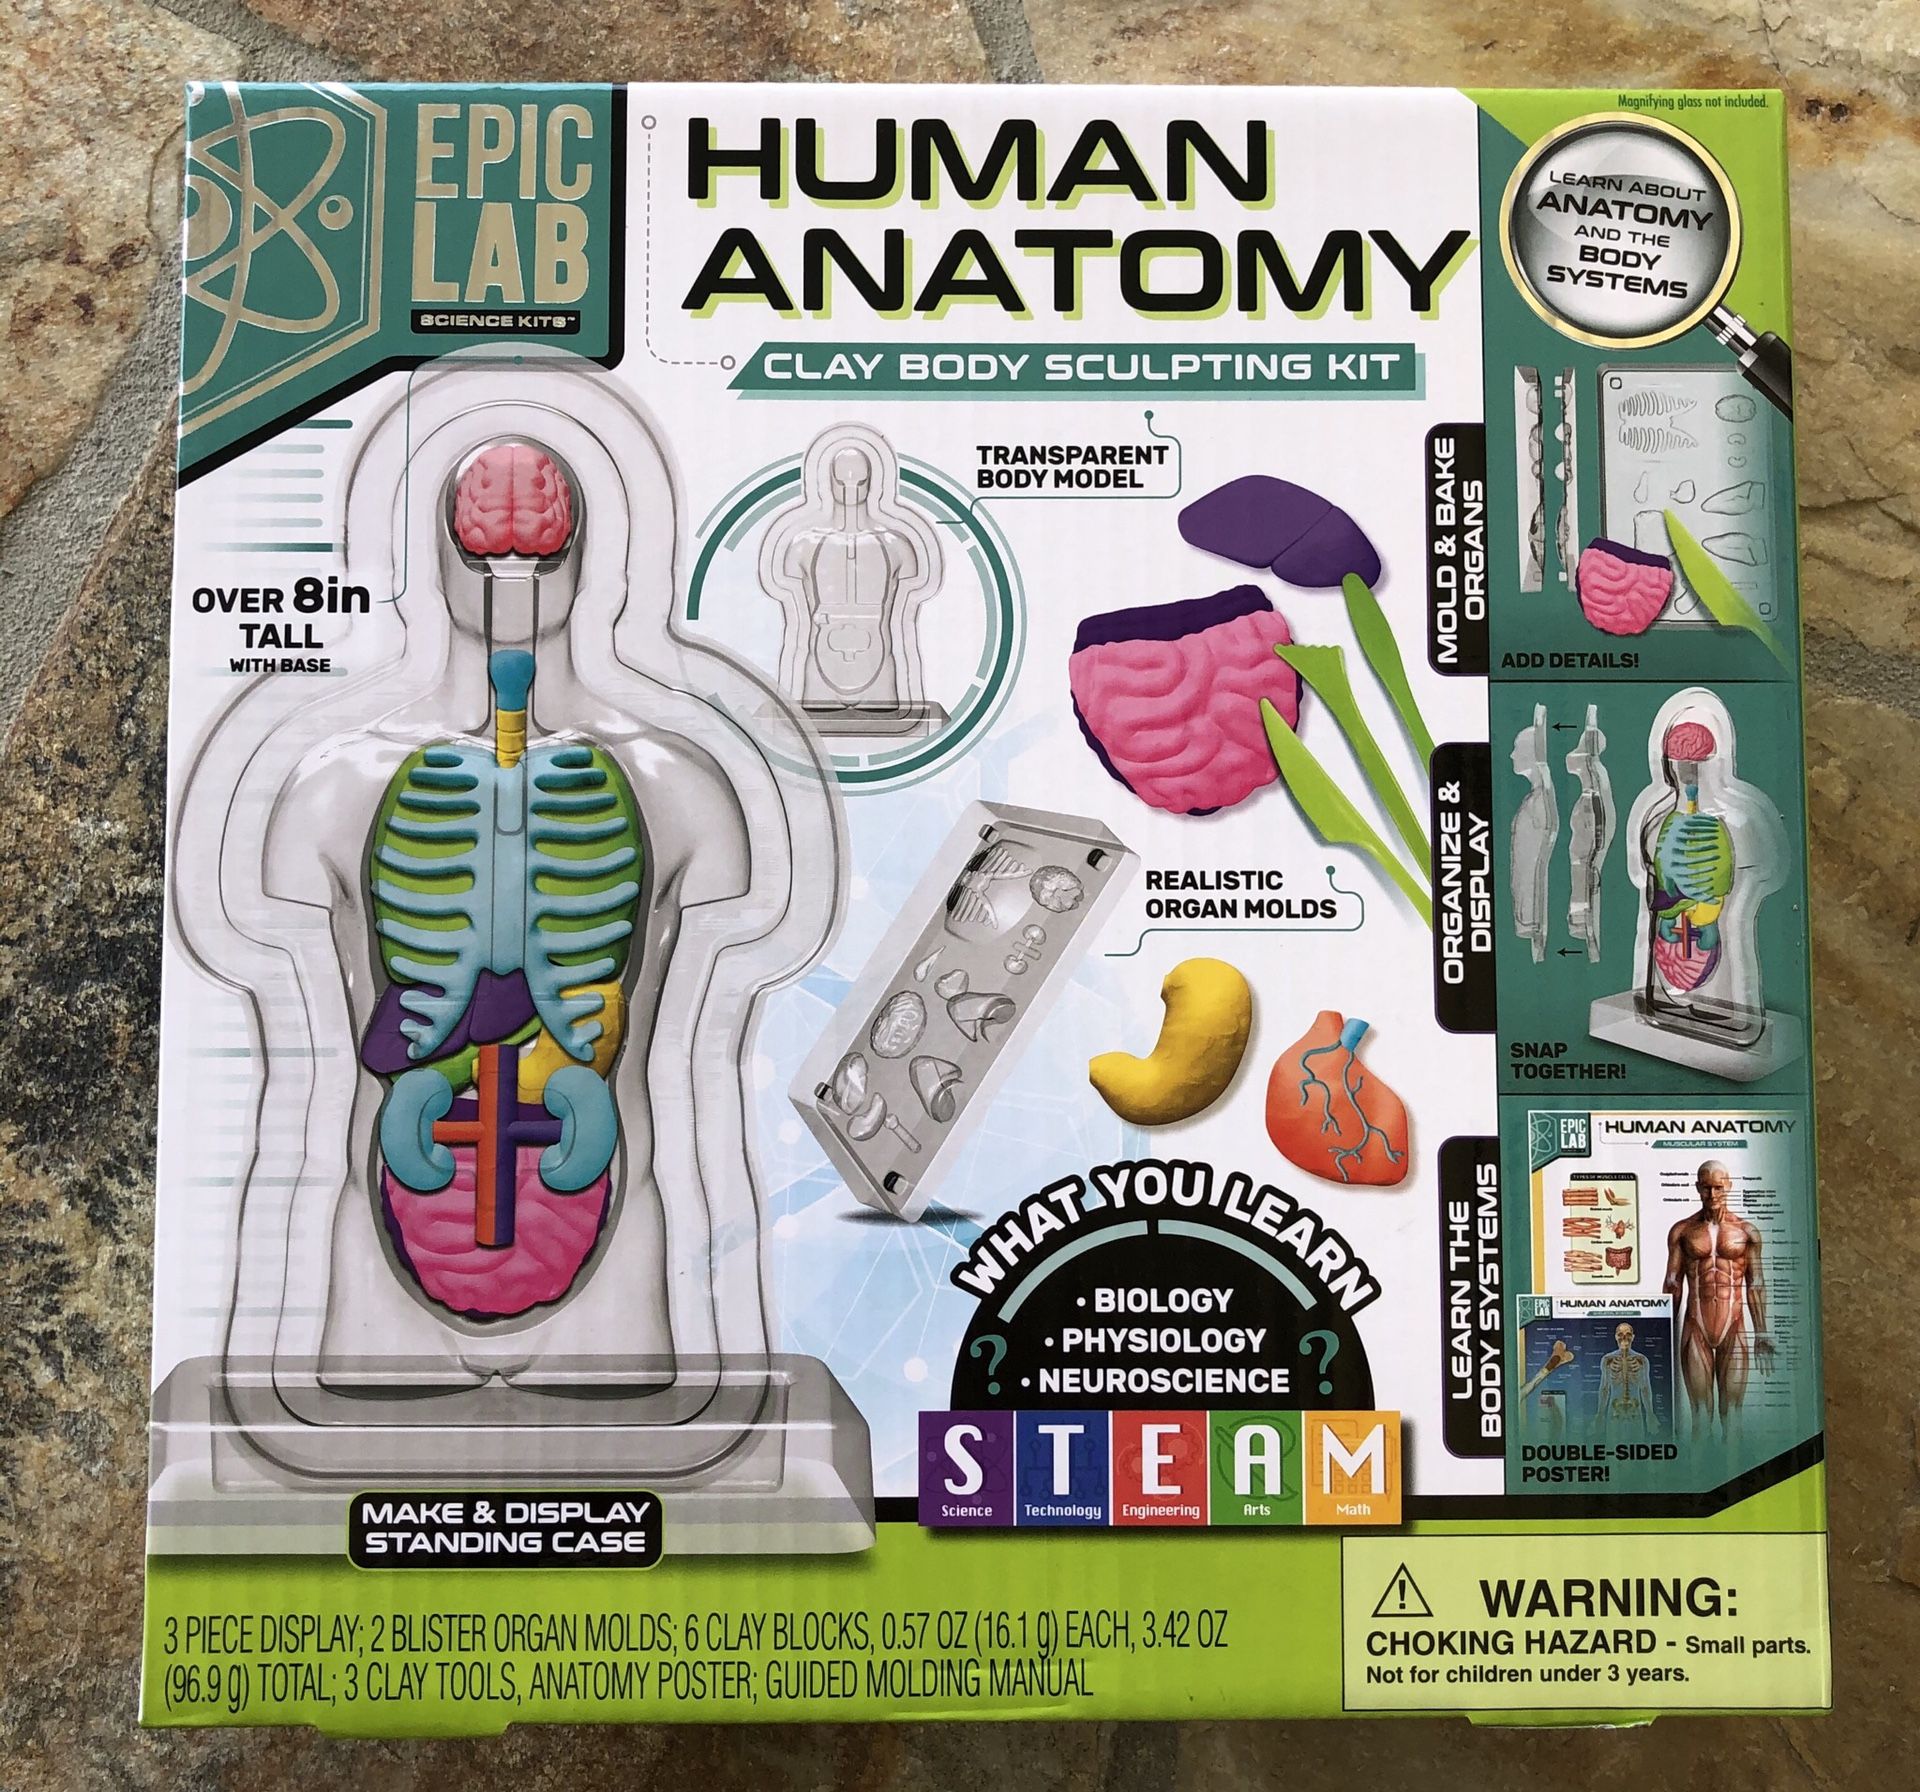 Human Anatomy Clay Body Sculpting Kit